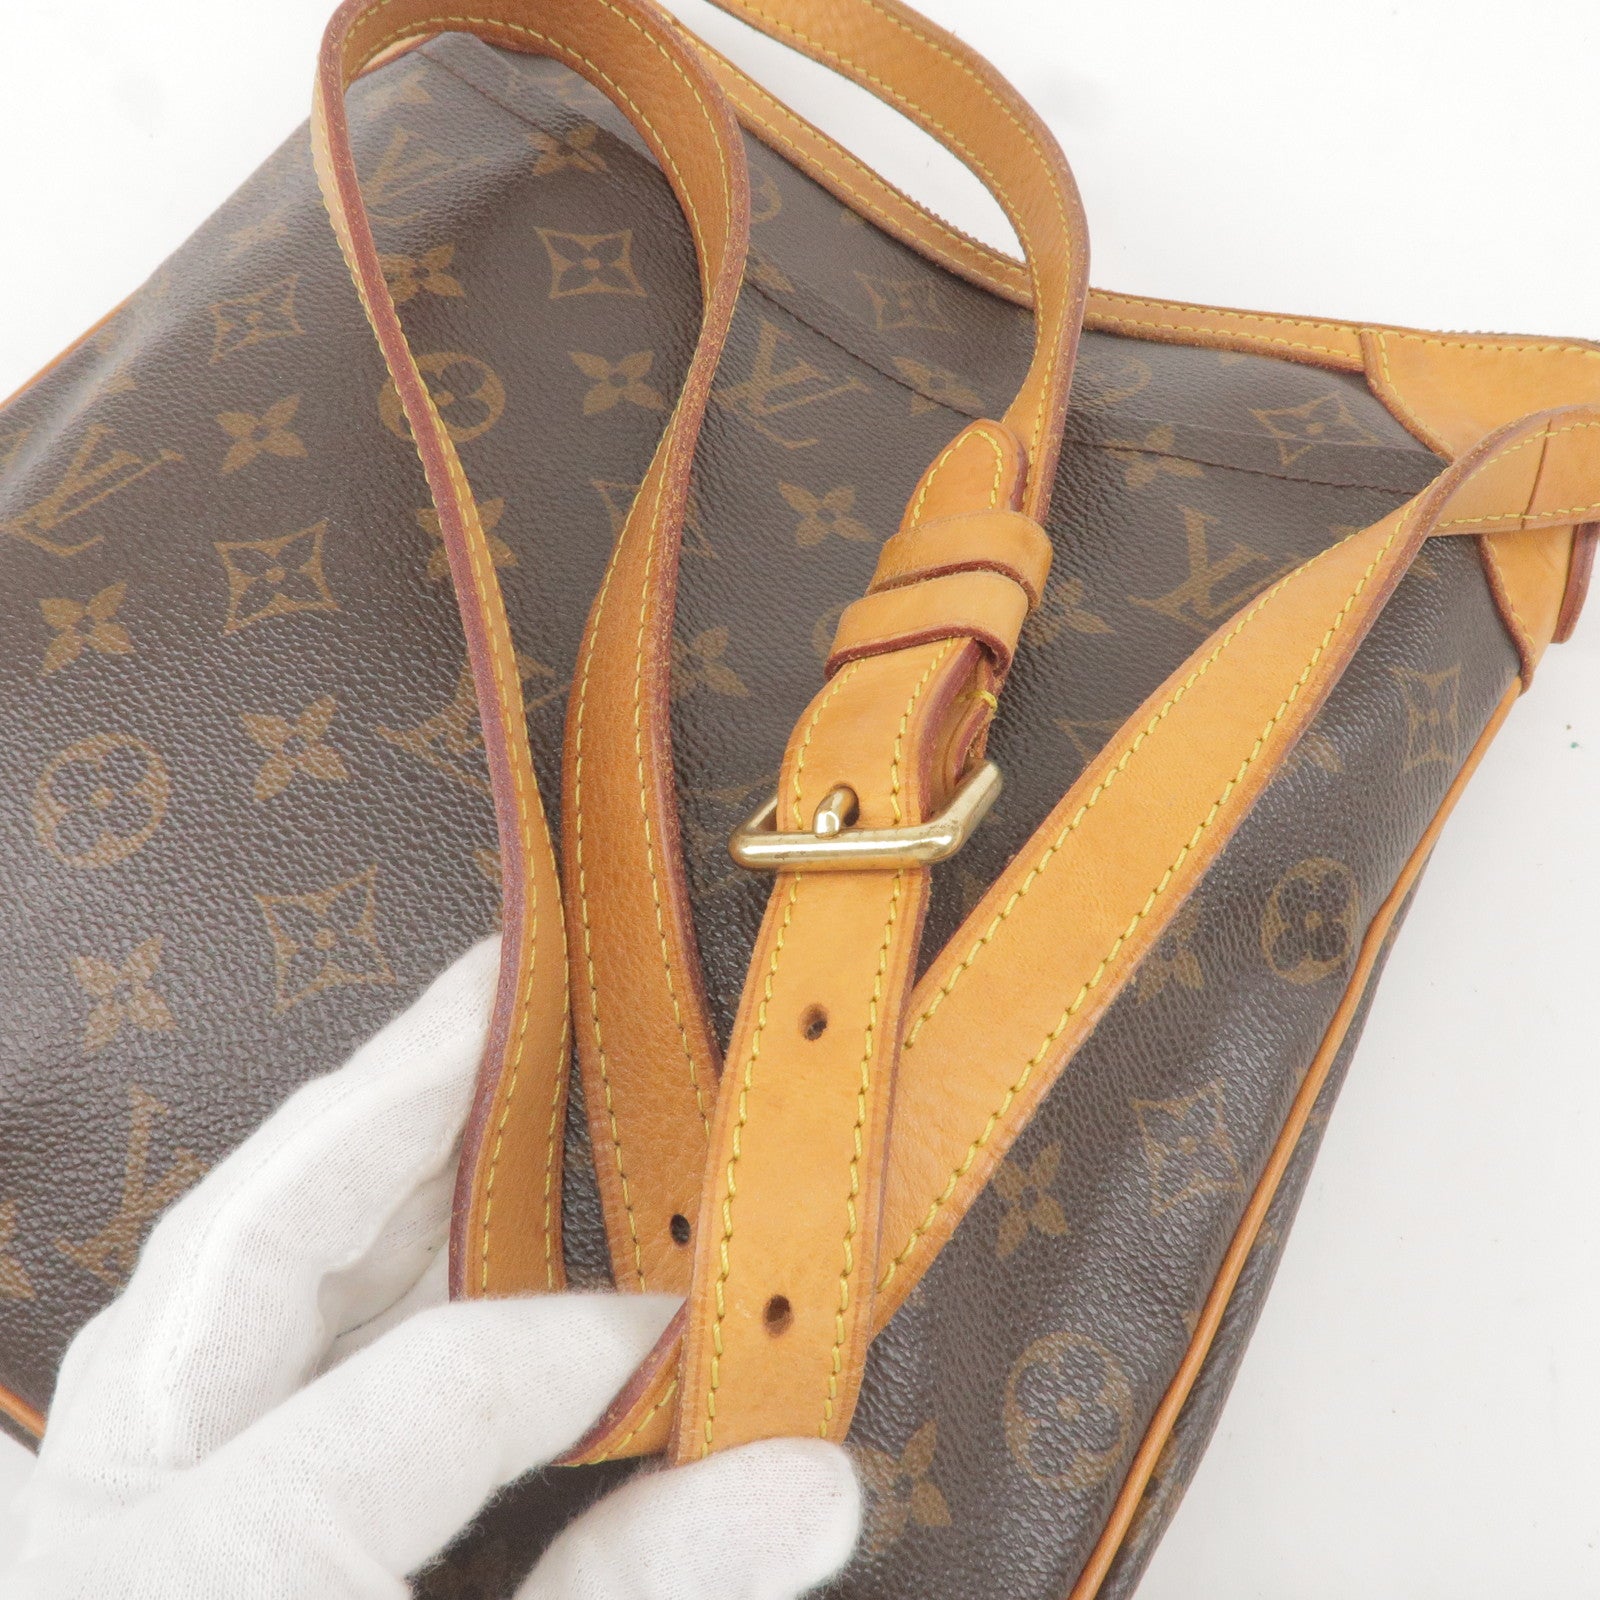 Louis Vuitton Bergamo MM Bag Review 